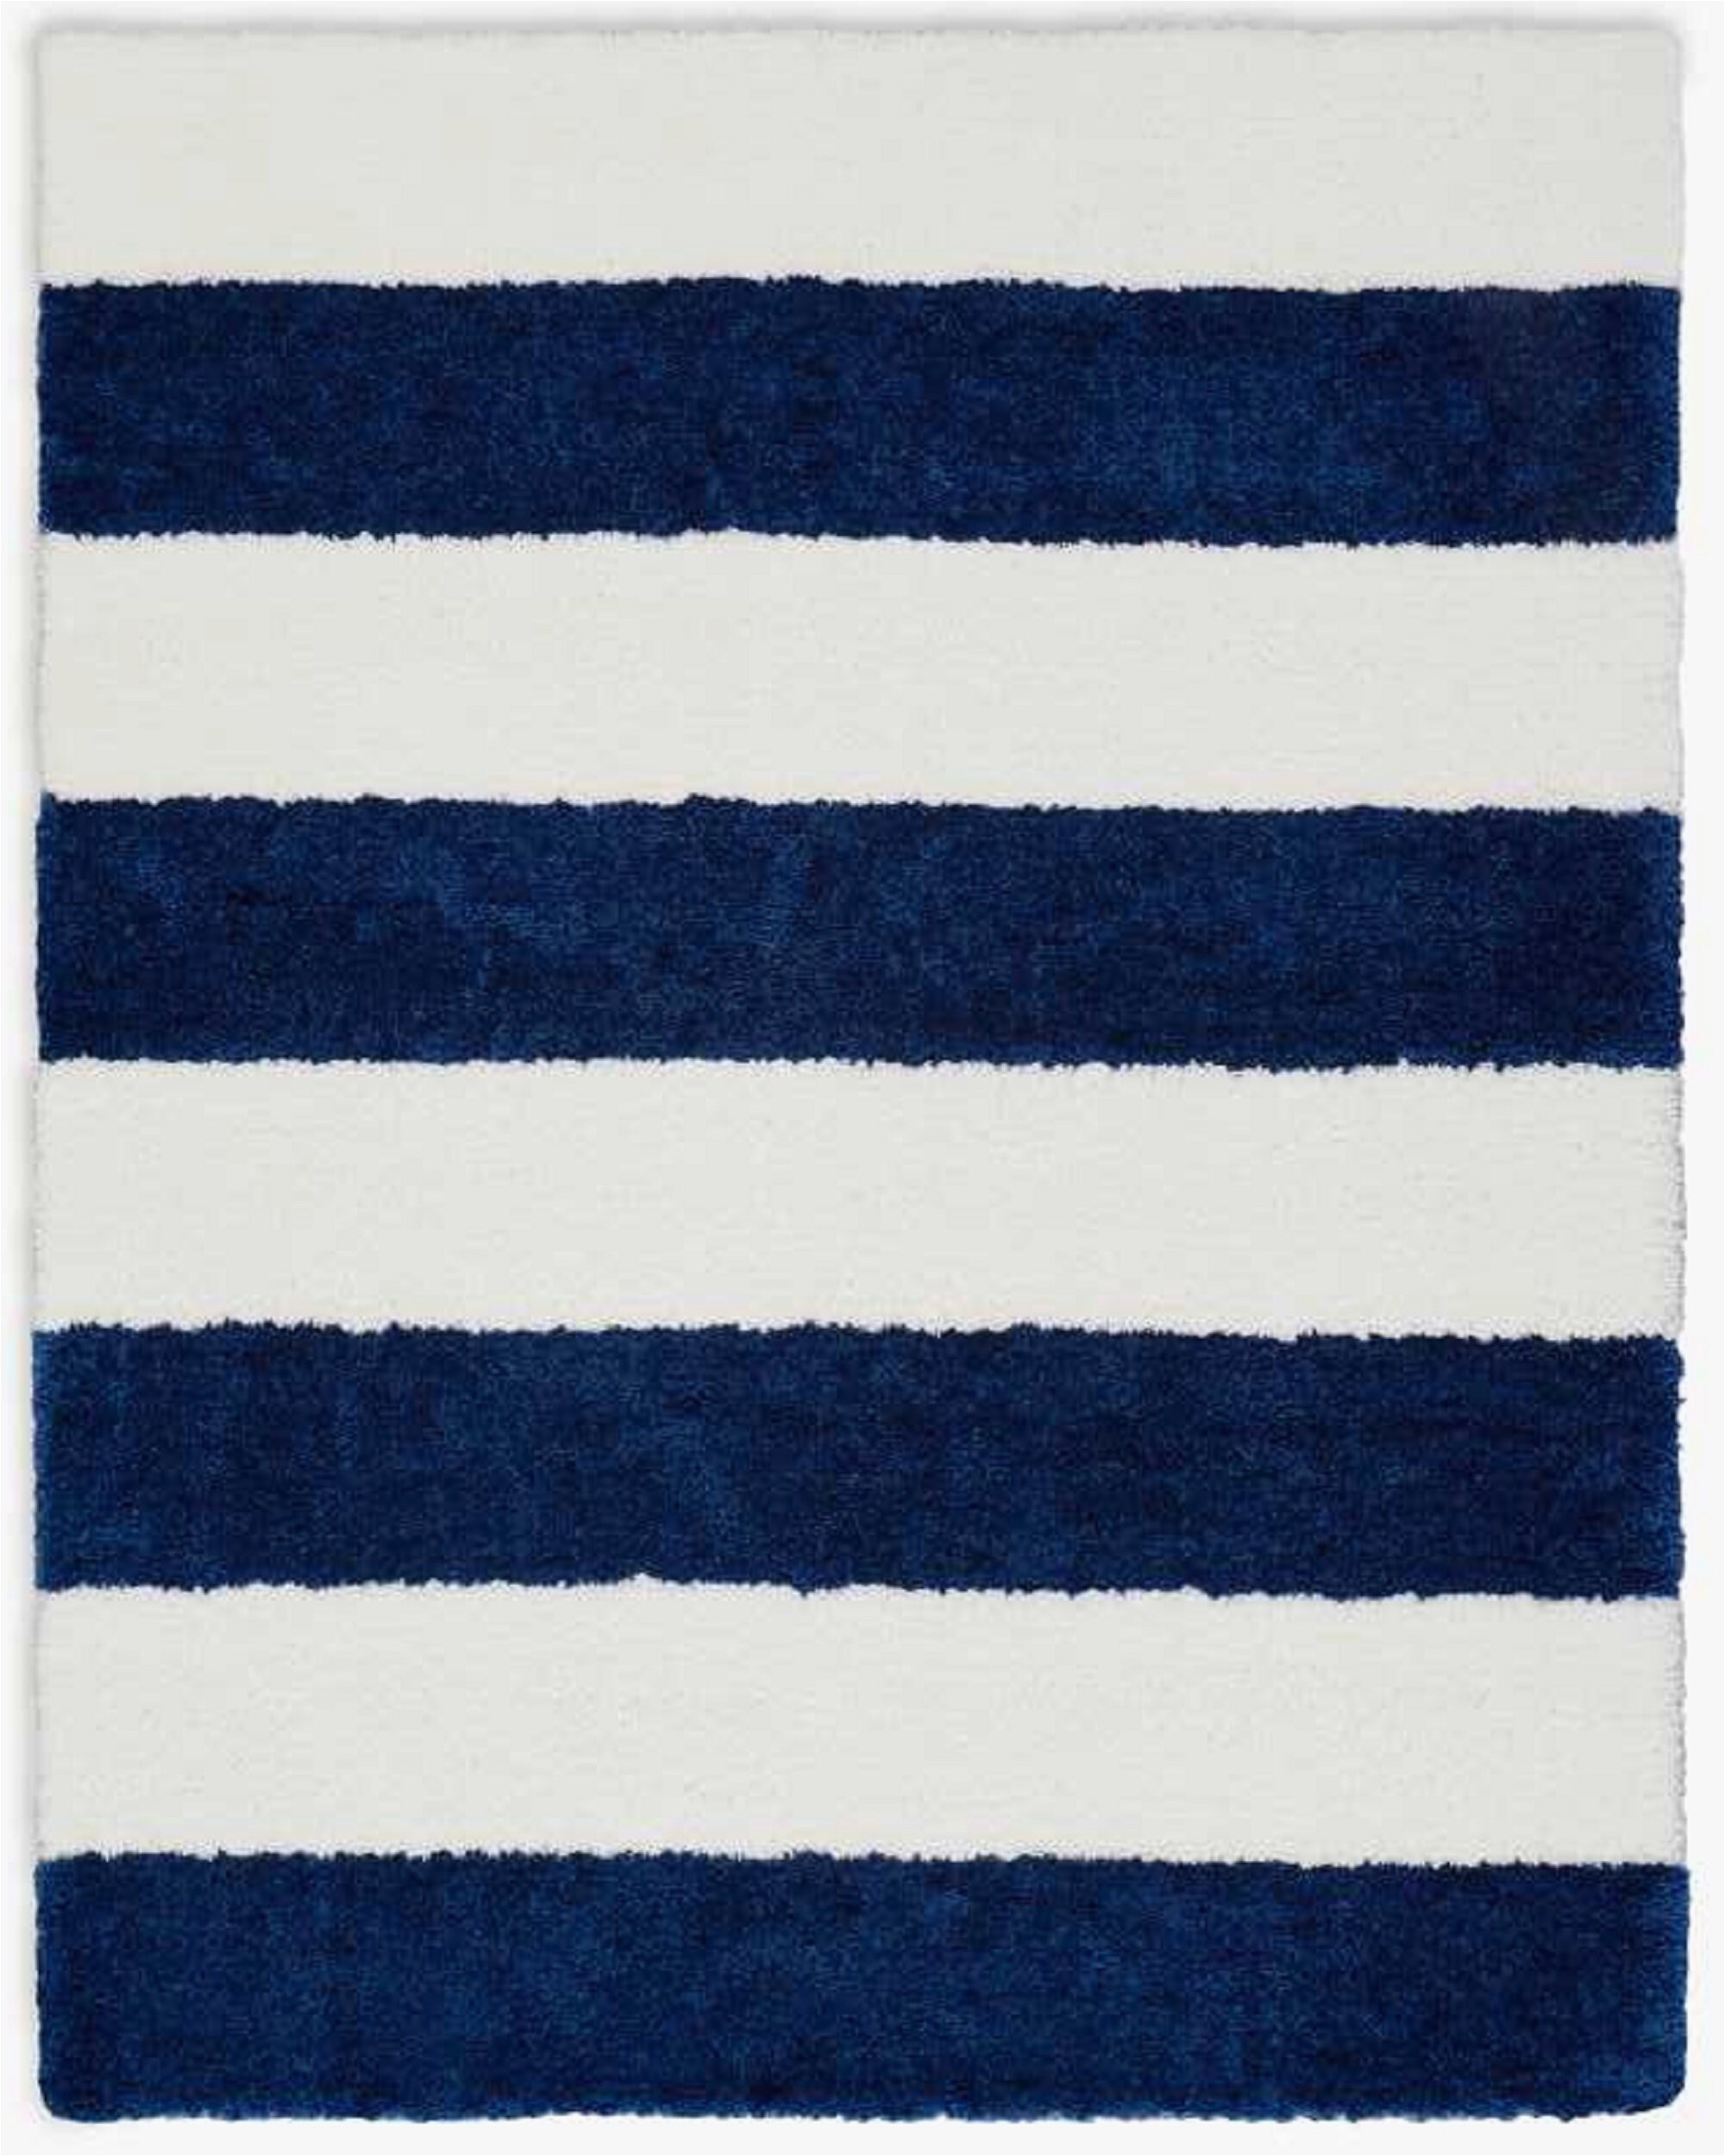 Navy Blue and White Striped Rug Chicago Striped Handmade Shag White Navy Blue area Rug